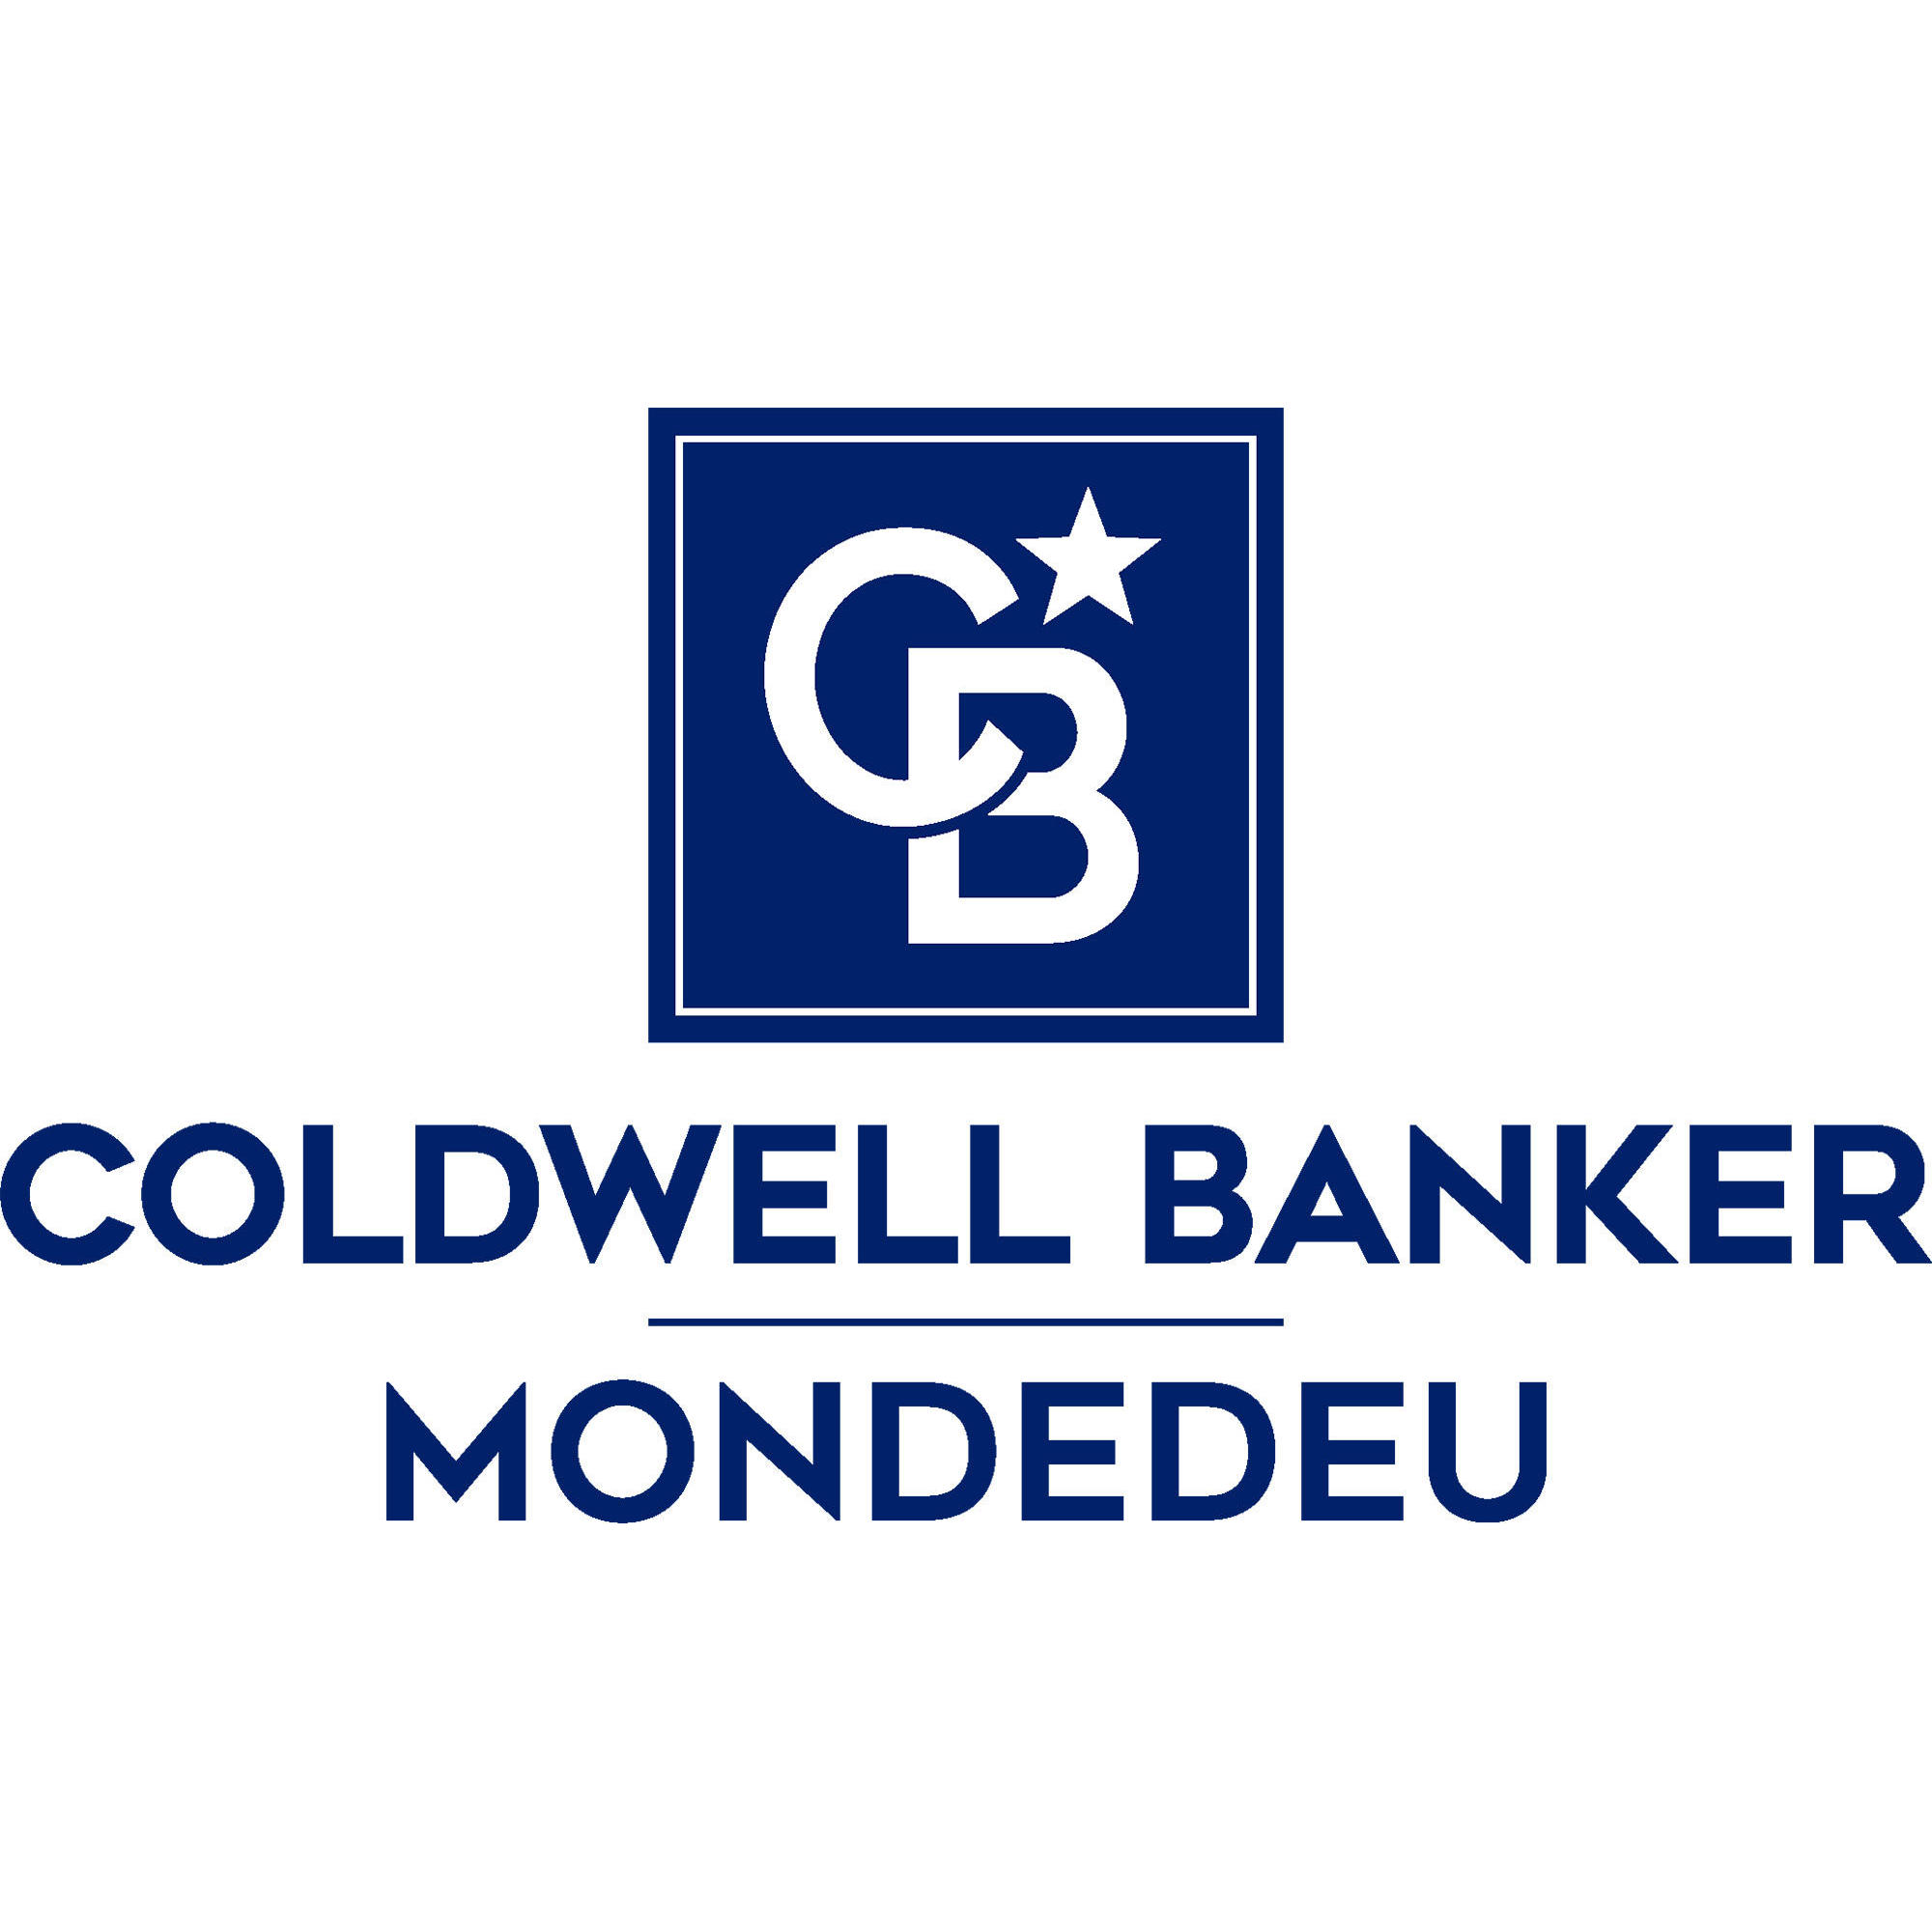 Coldwell Banker Mondedeu Logo